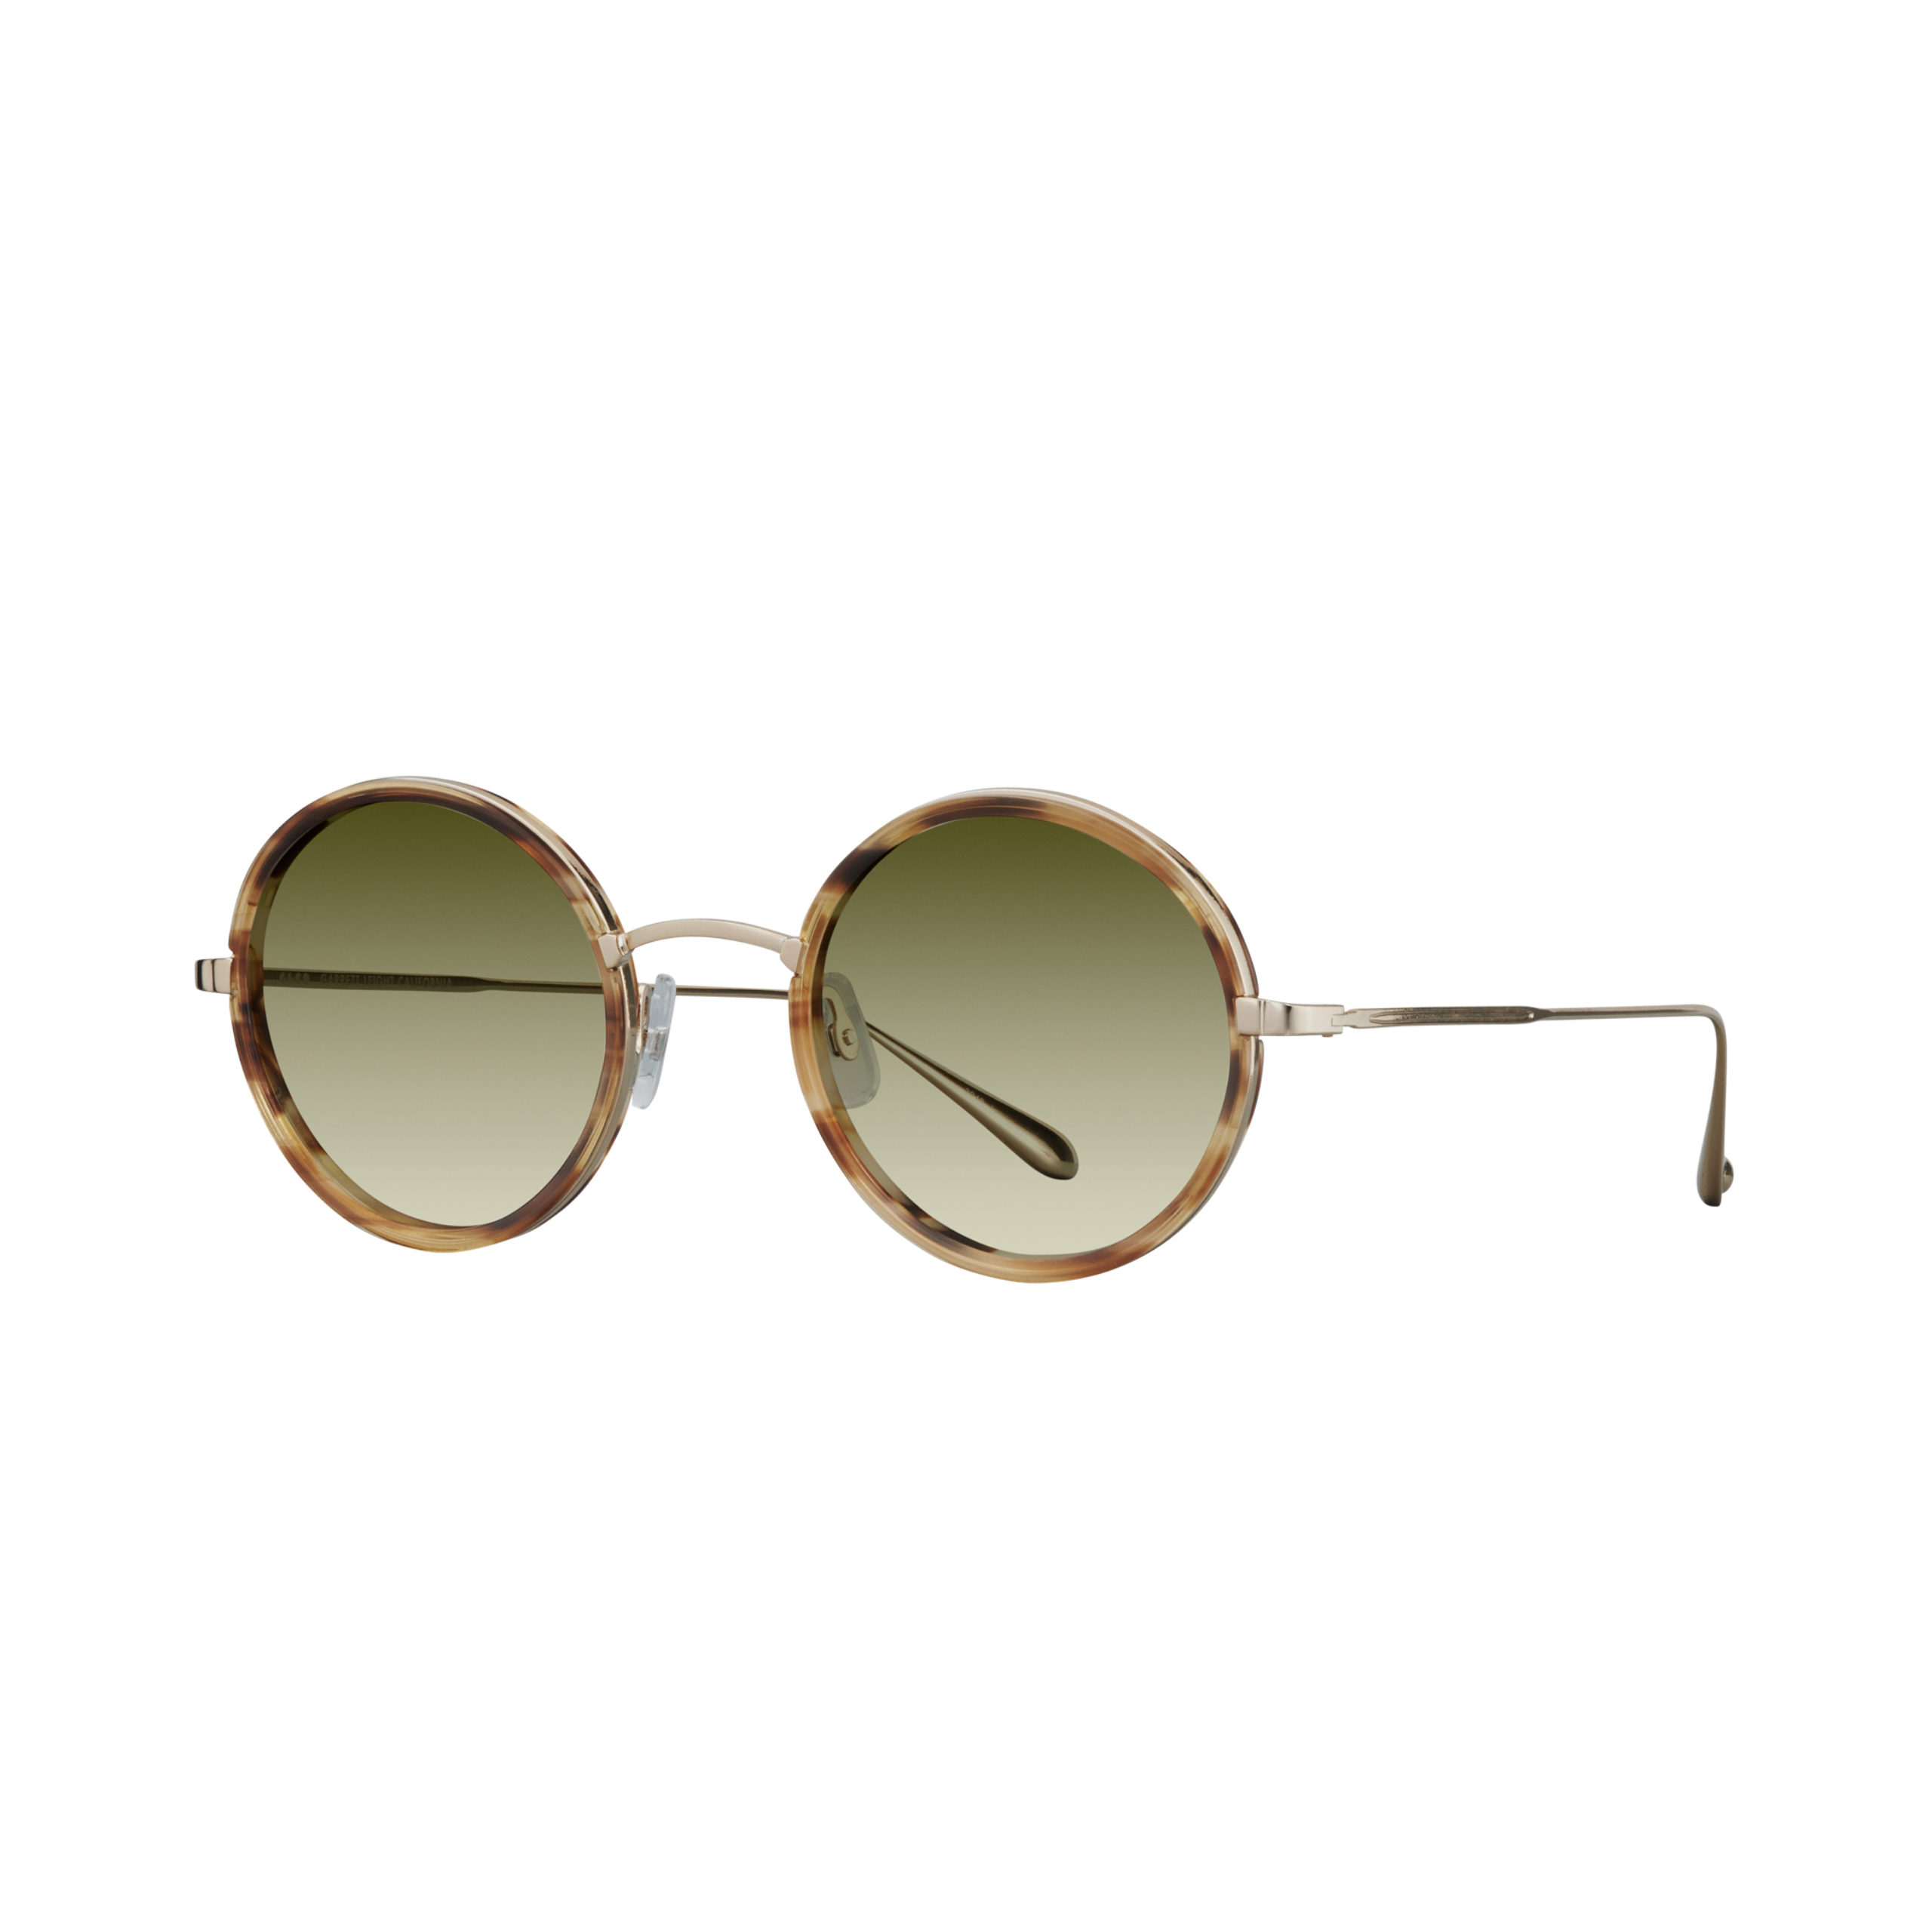 Garrett Leight eyewear - Kinney sunglasses • Frames and Faces